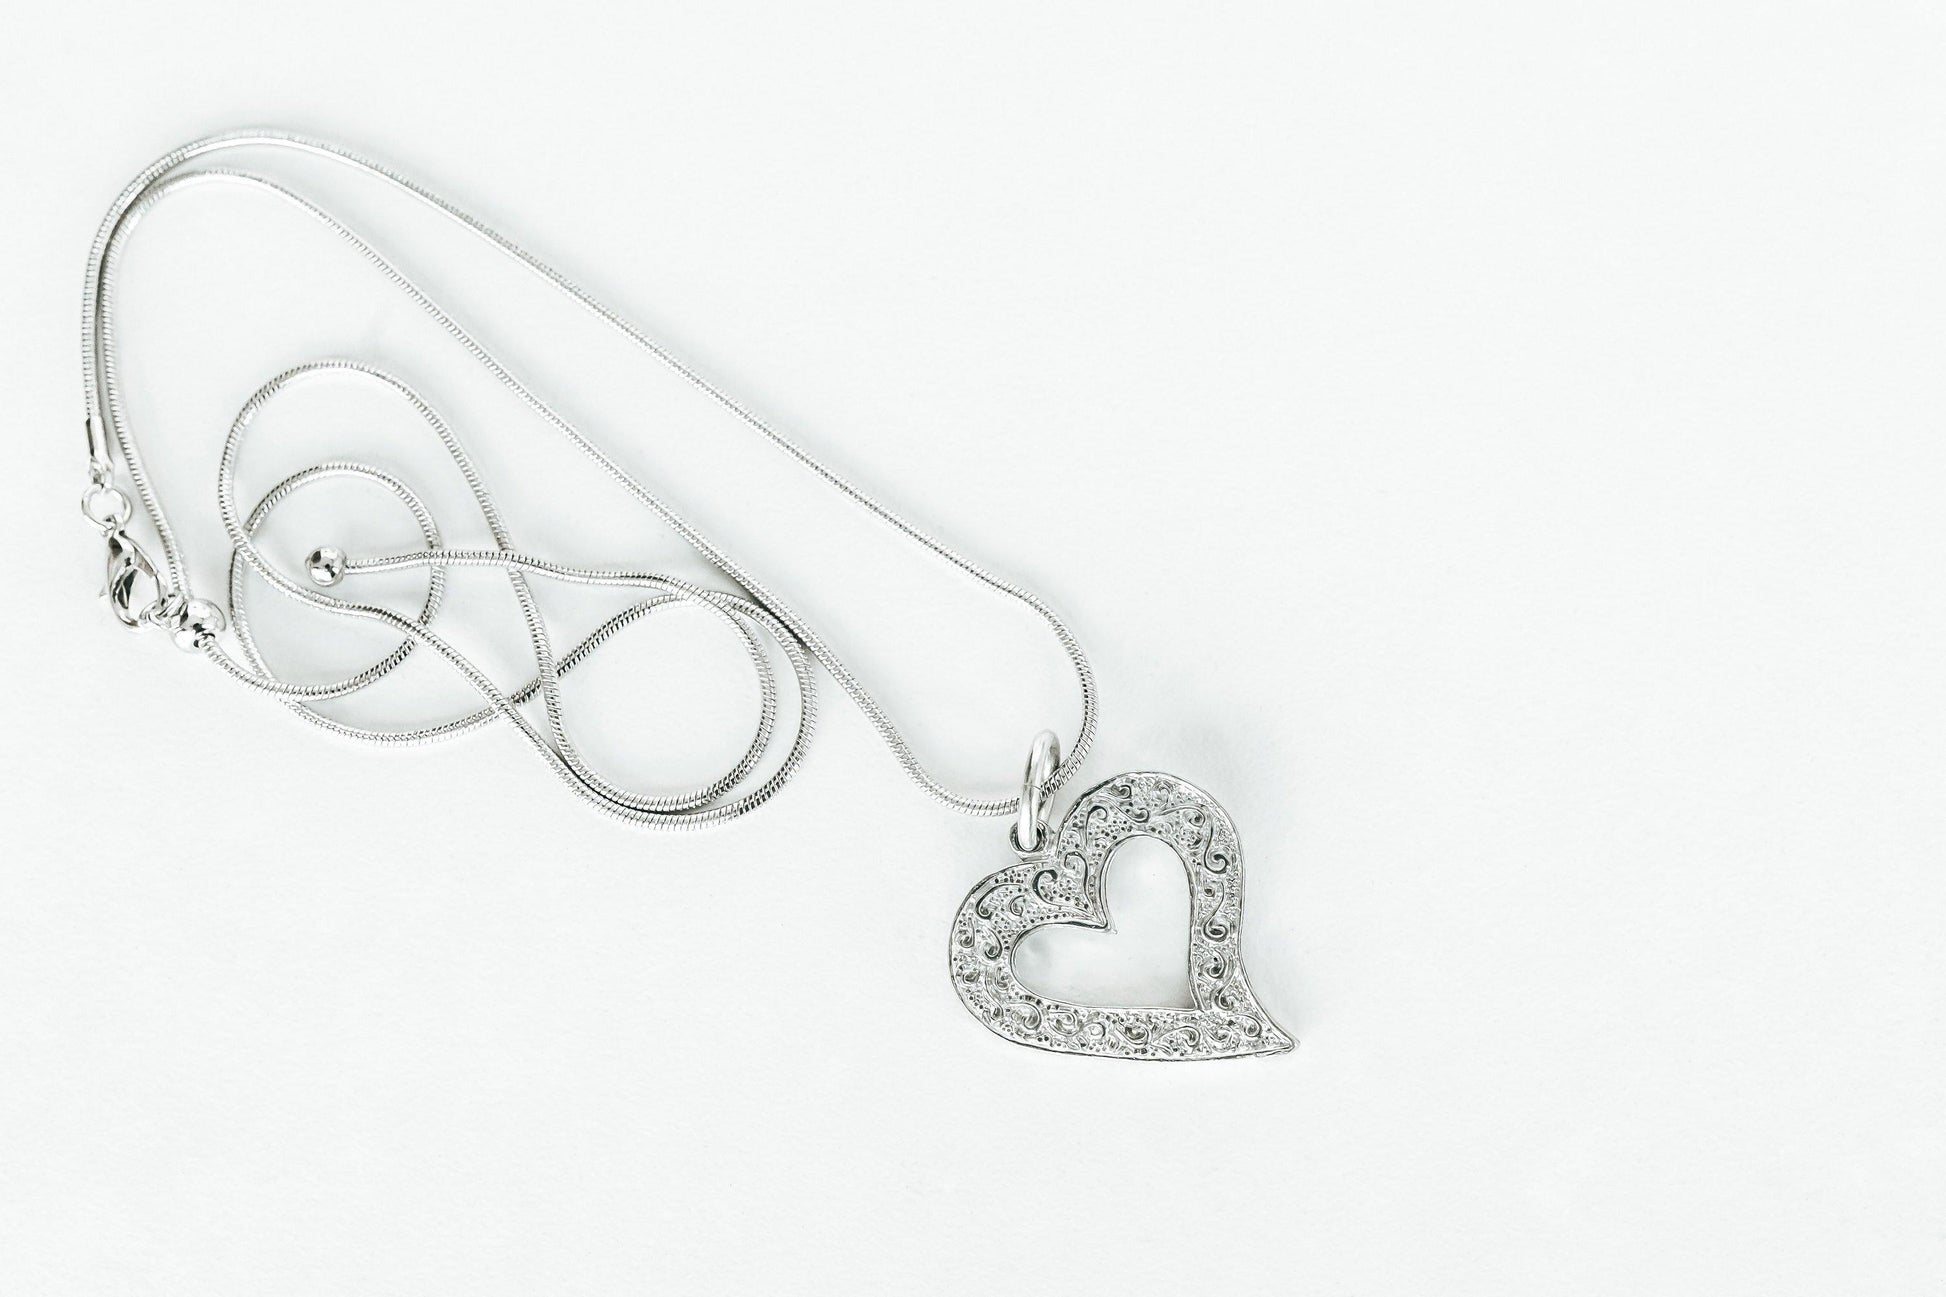 Handmade Pewter Pendant Necklace- Asymmetric Heart - House of Morgan Pewter